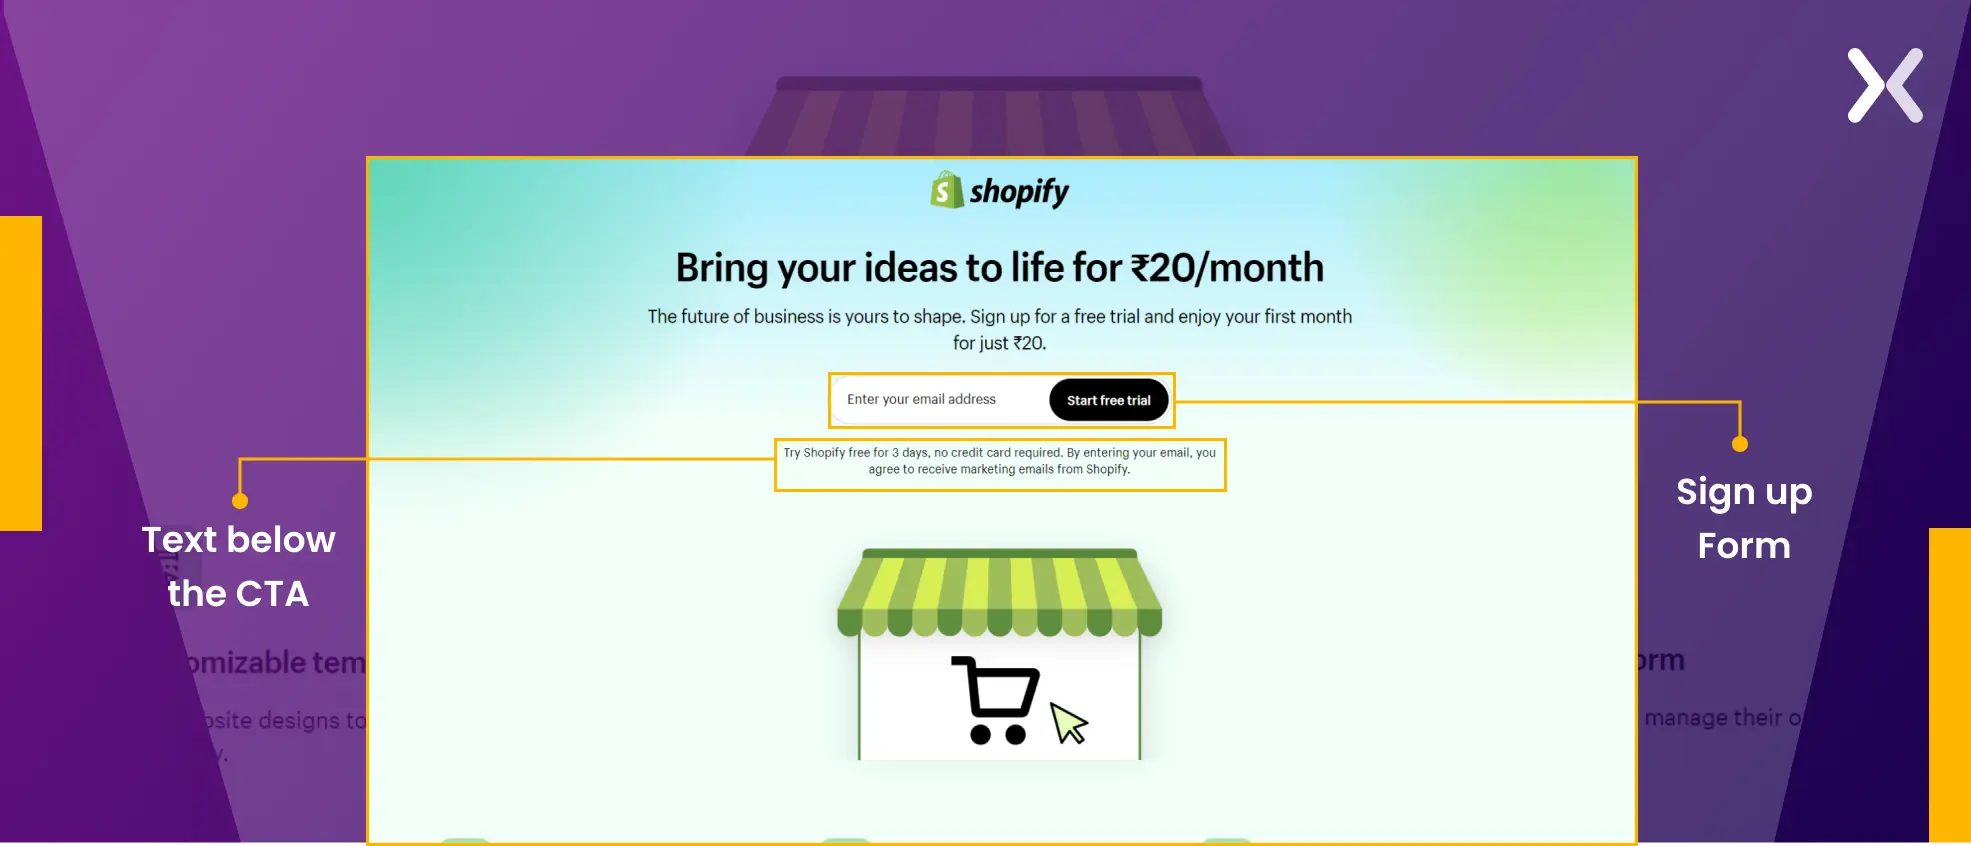 shopify-free-trial-landing-page.webp